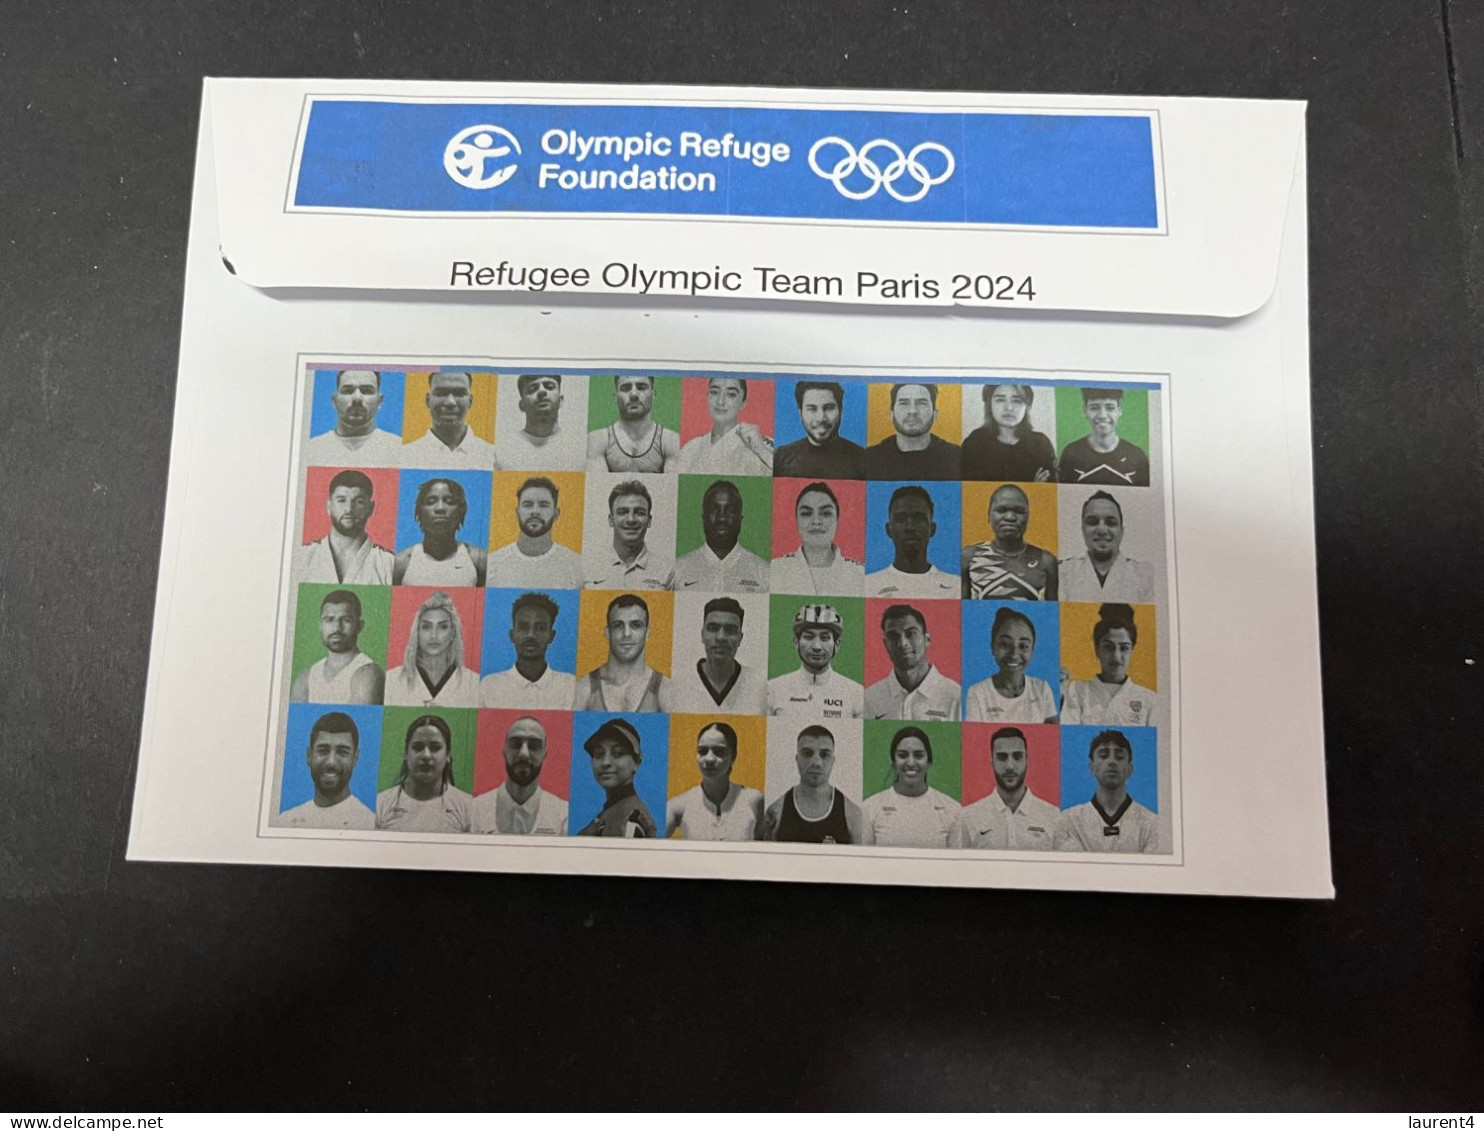 5-5-2024 (4 Z 12 A) Paris Olympic Games 2024 - Refugee Olympic Team (36 Athletes) - Zomer 2024: Parijs